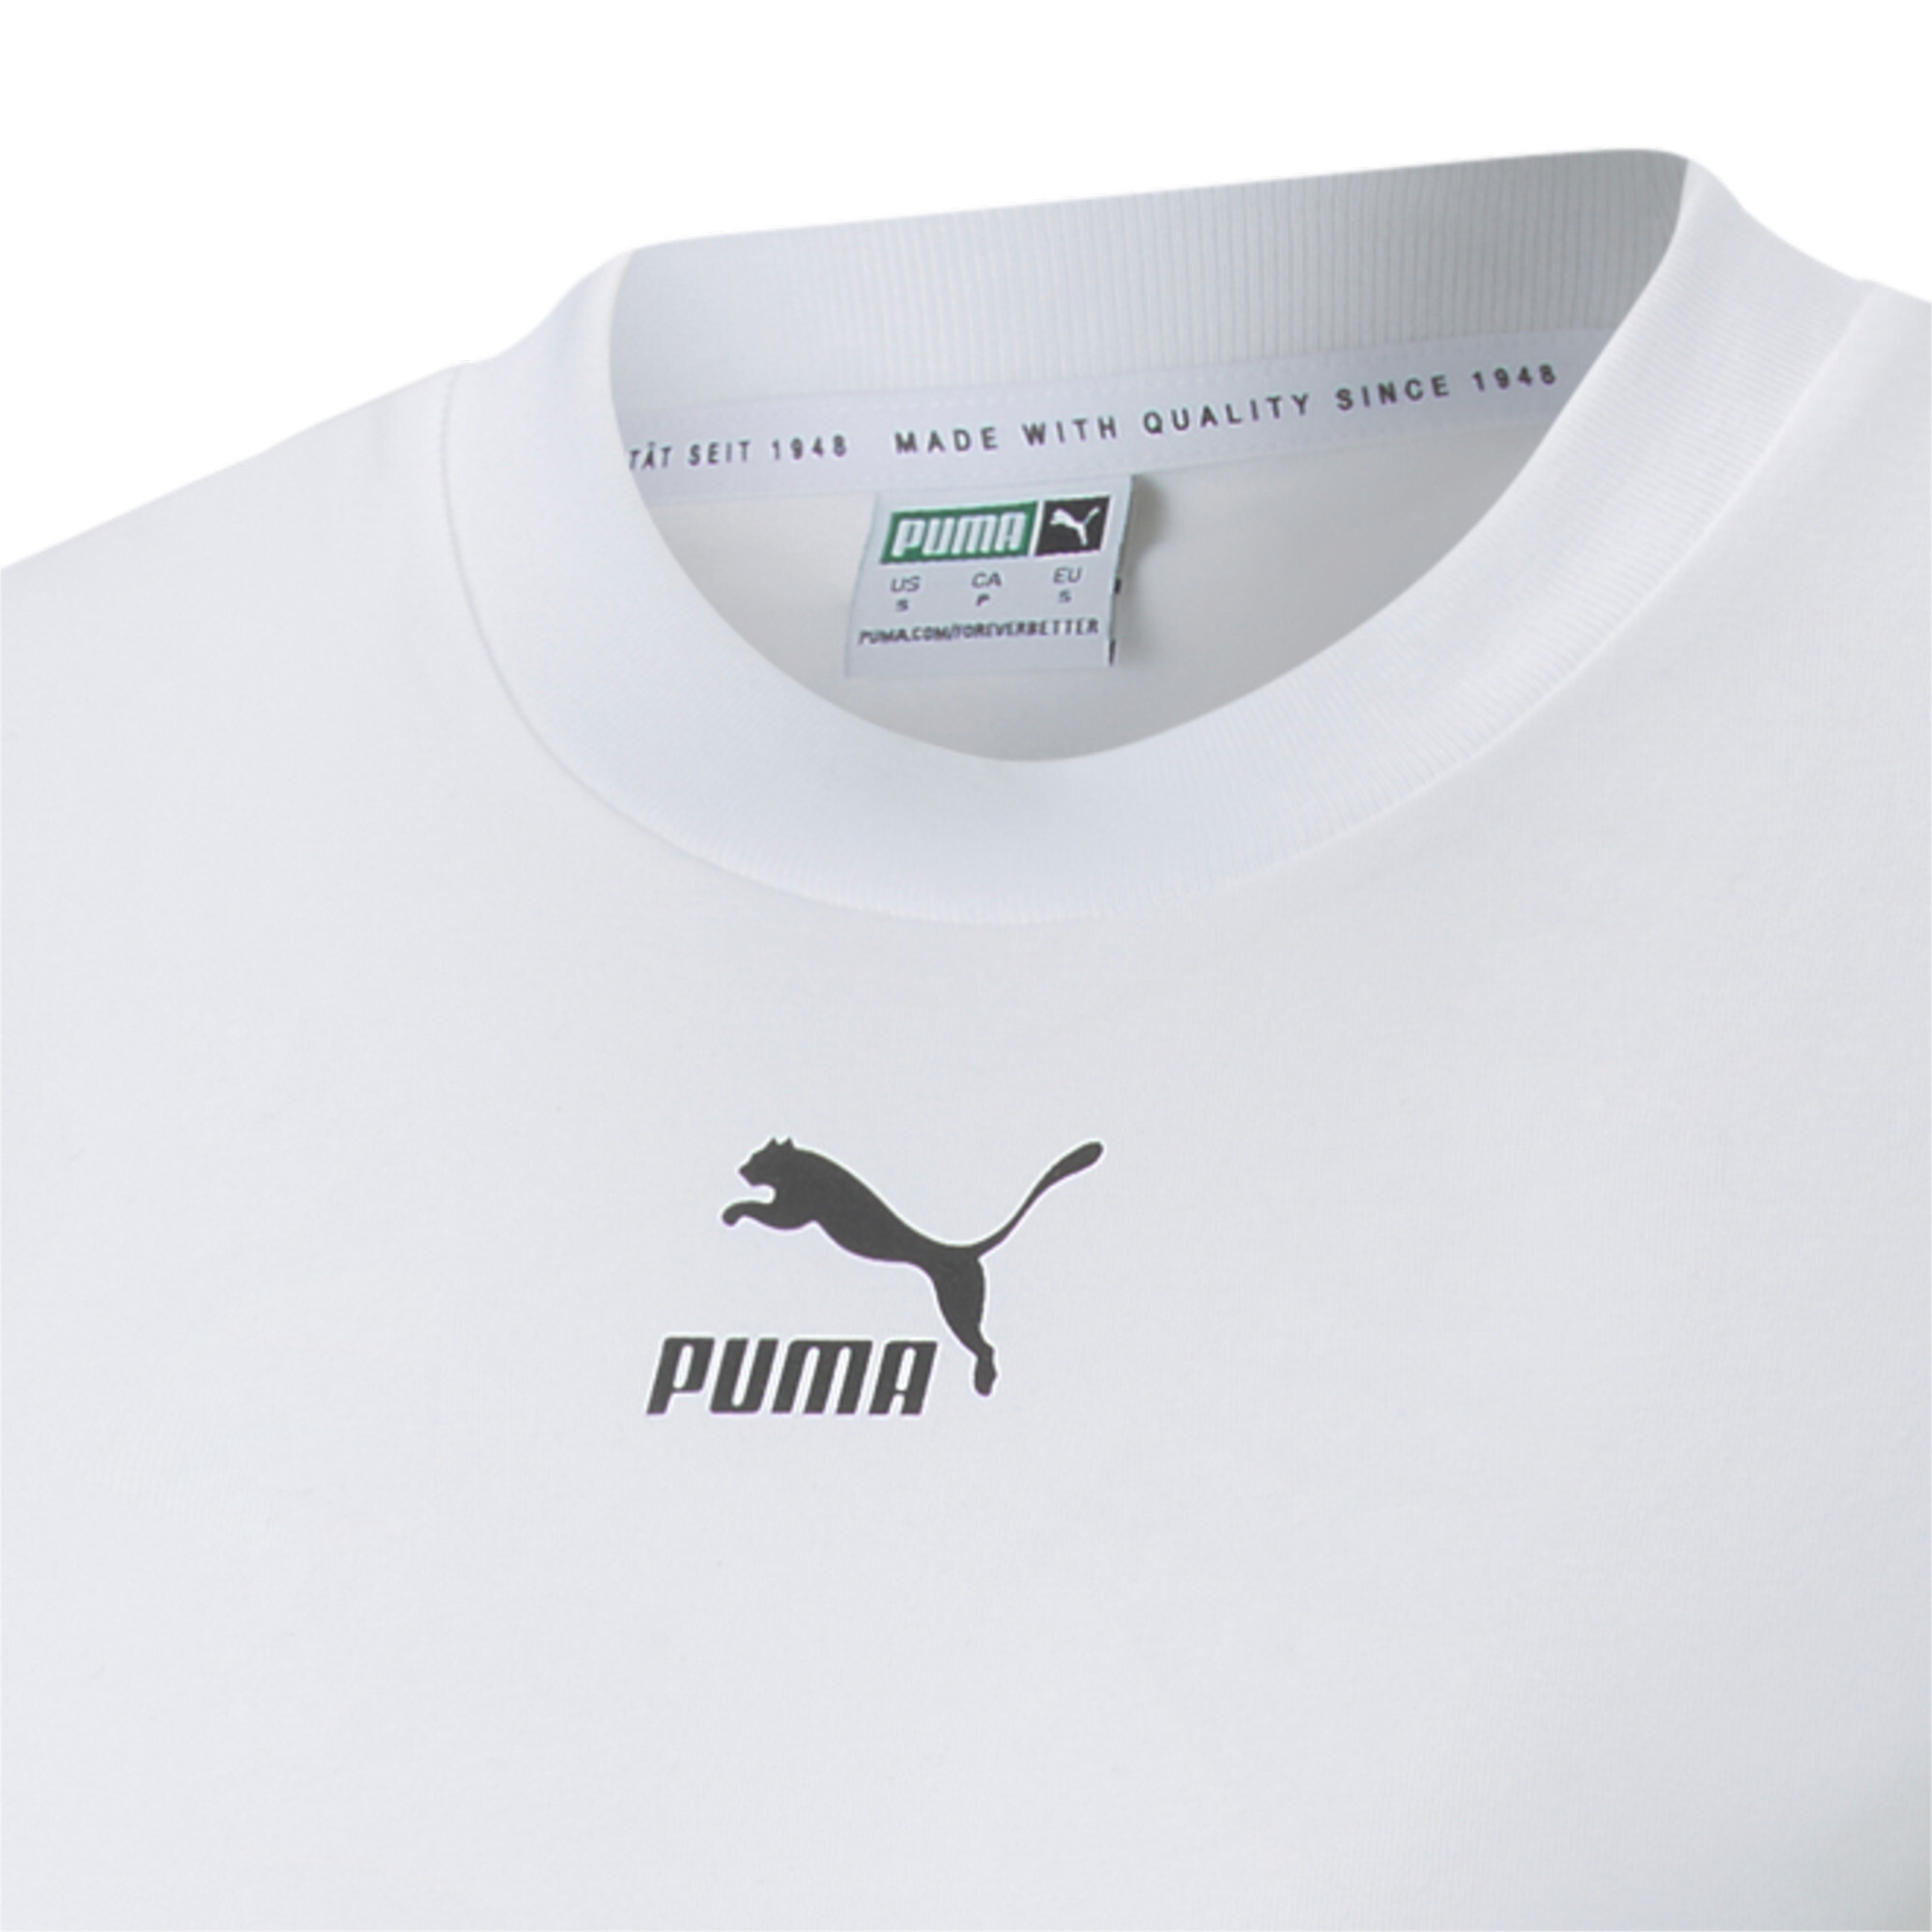 Women's PUMA Classics Slim T-Shirt Women In White, Size Large